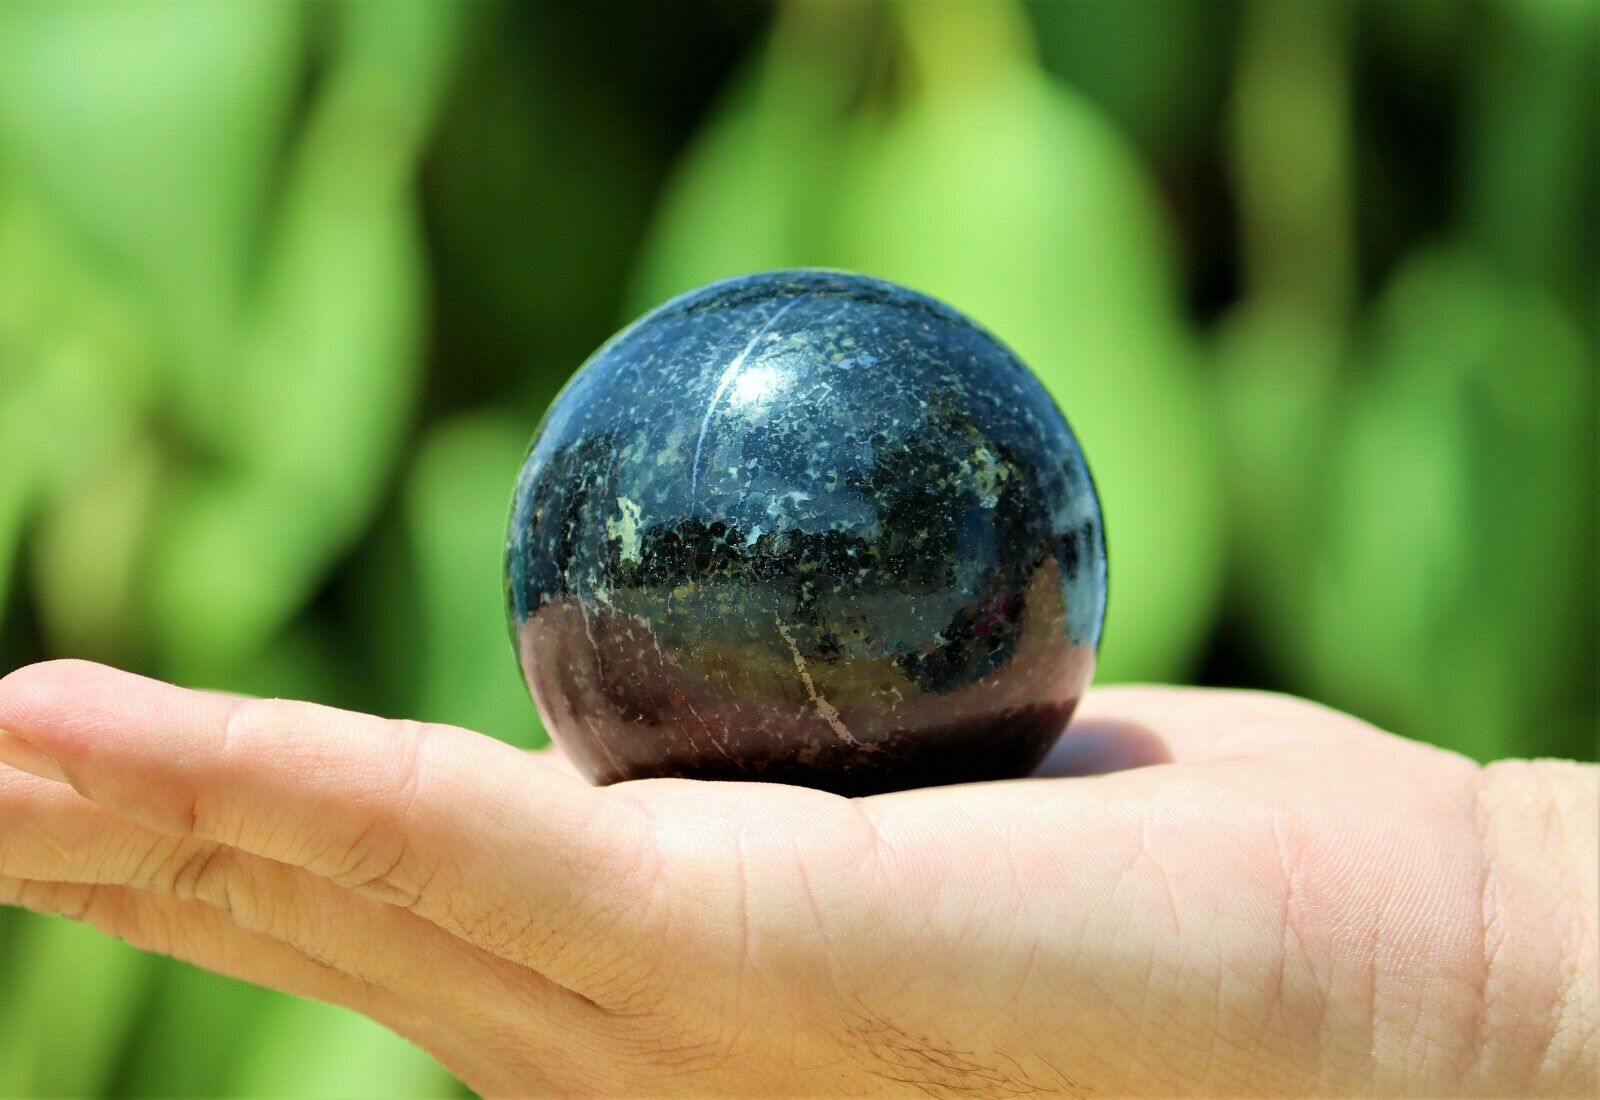 Amazing 50MM Black Nuummite Stone Sorcerer’s Stone Healing Metaphysical Sphere